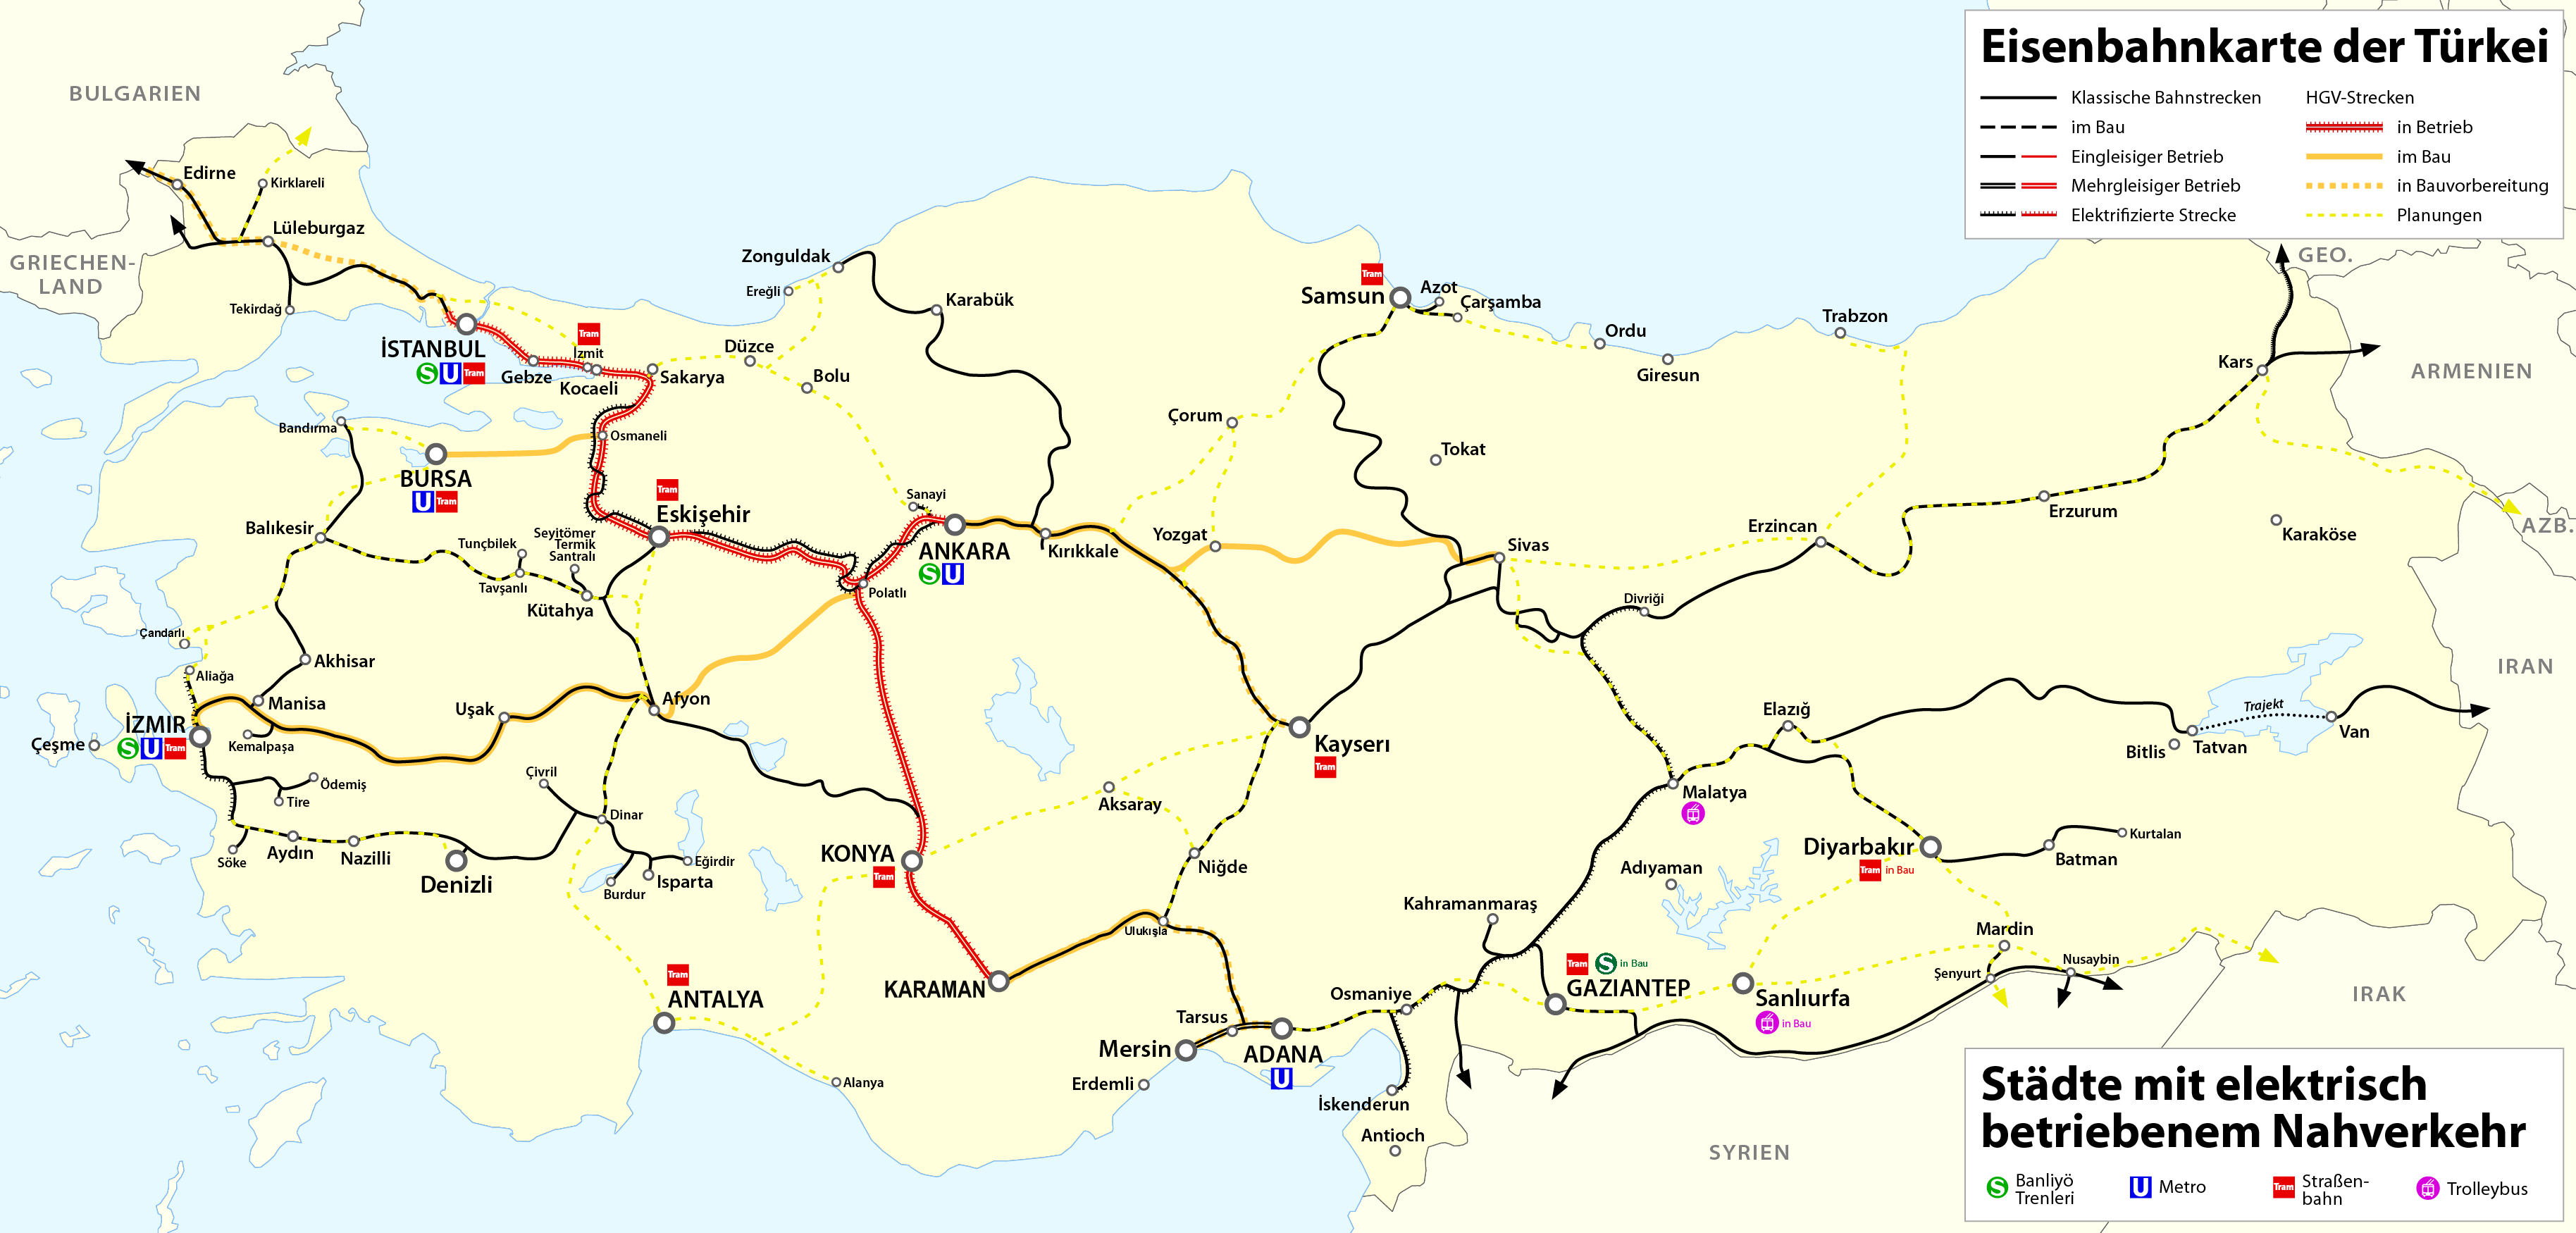 Turkish State Railways Wikipedia